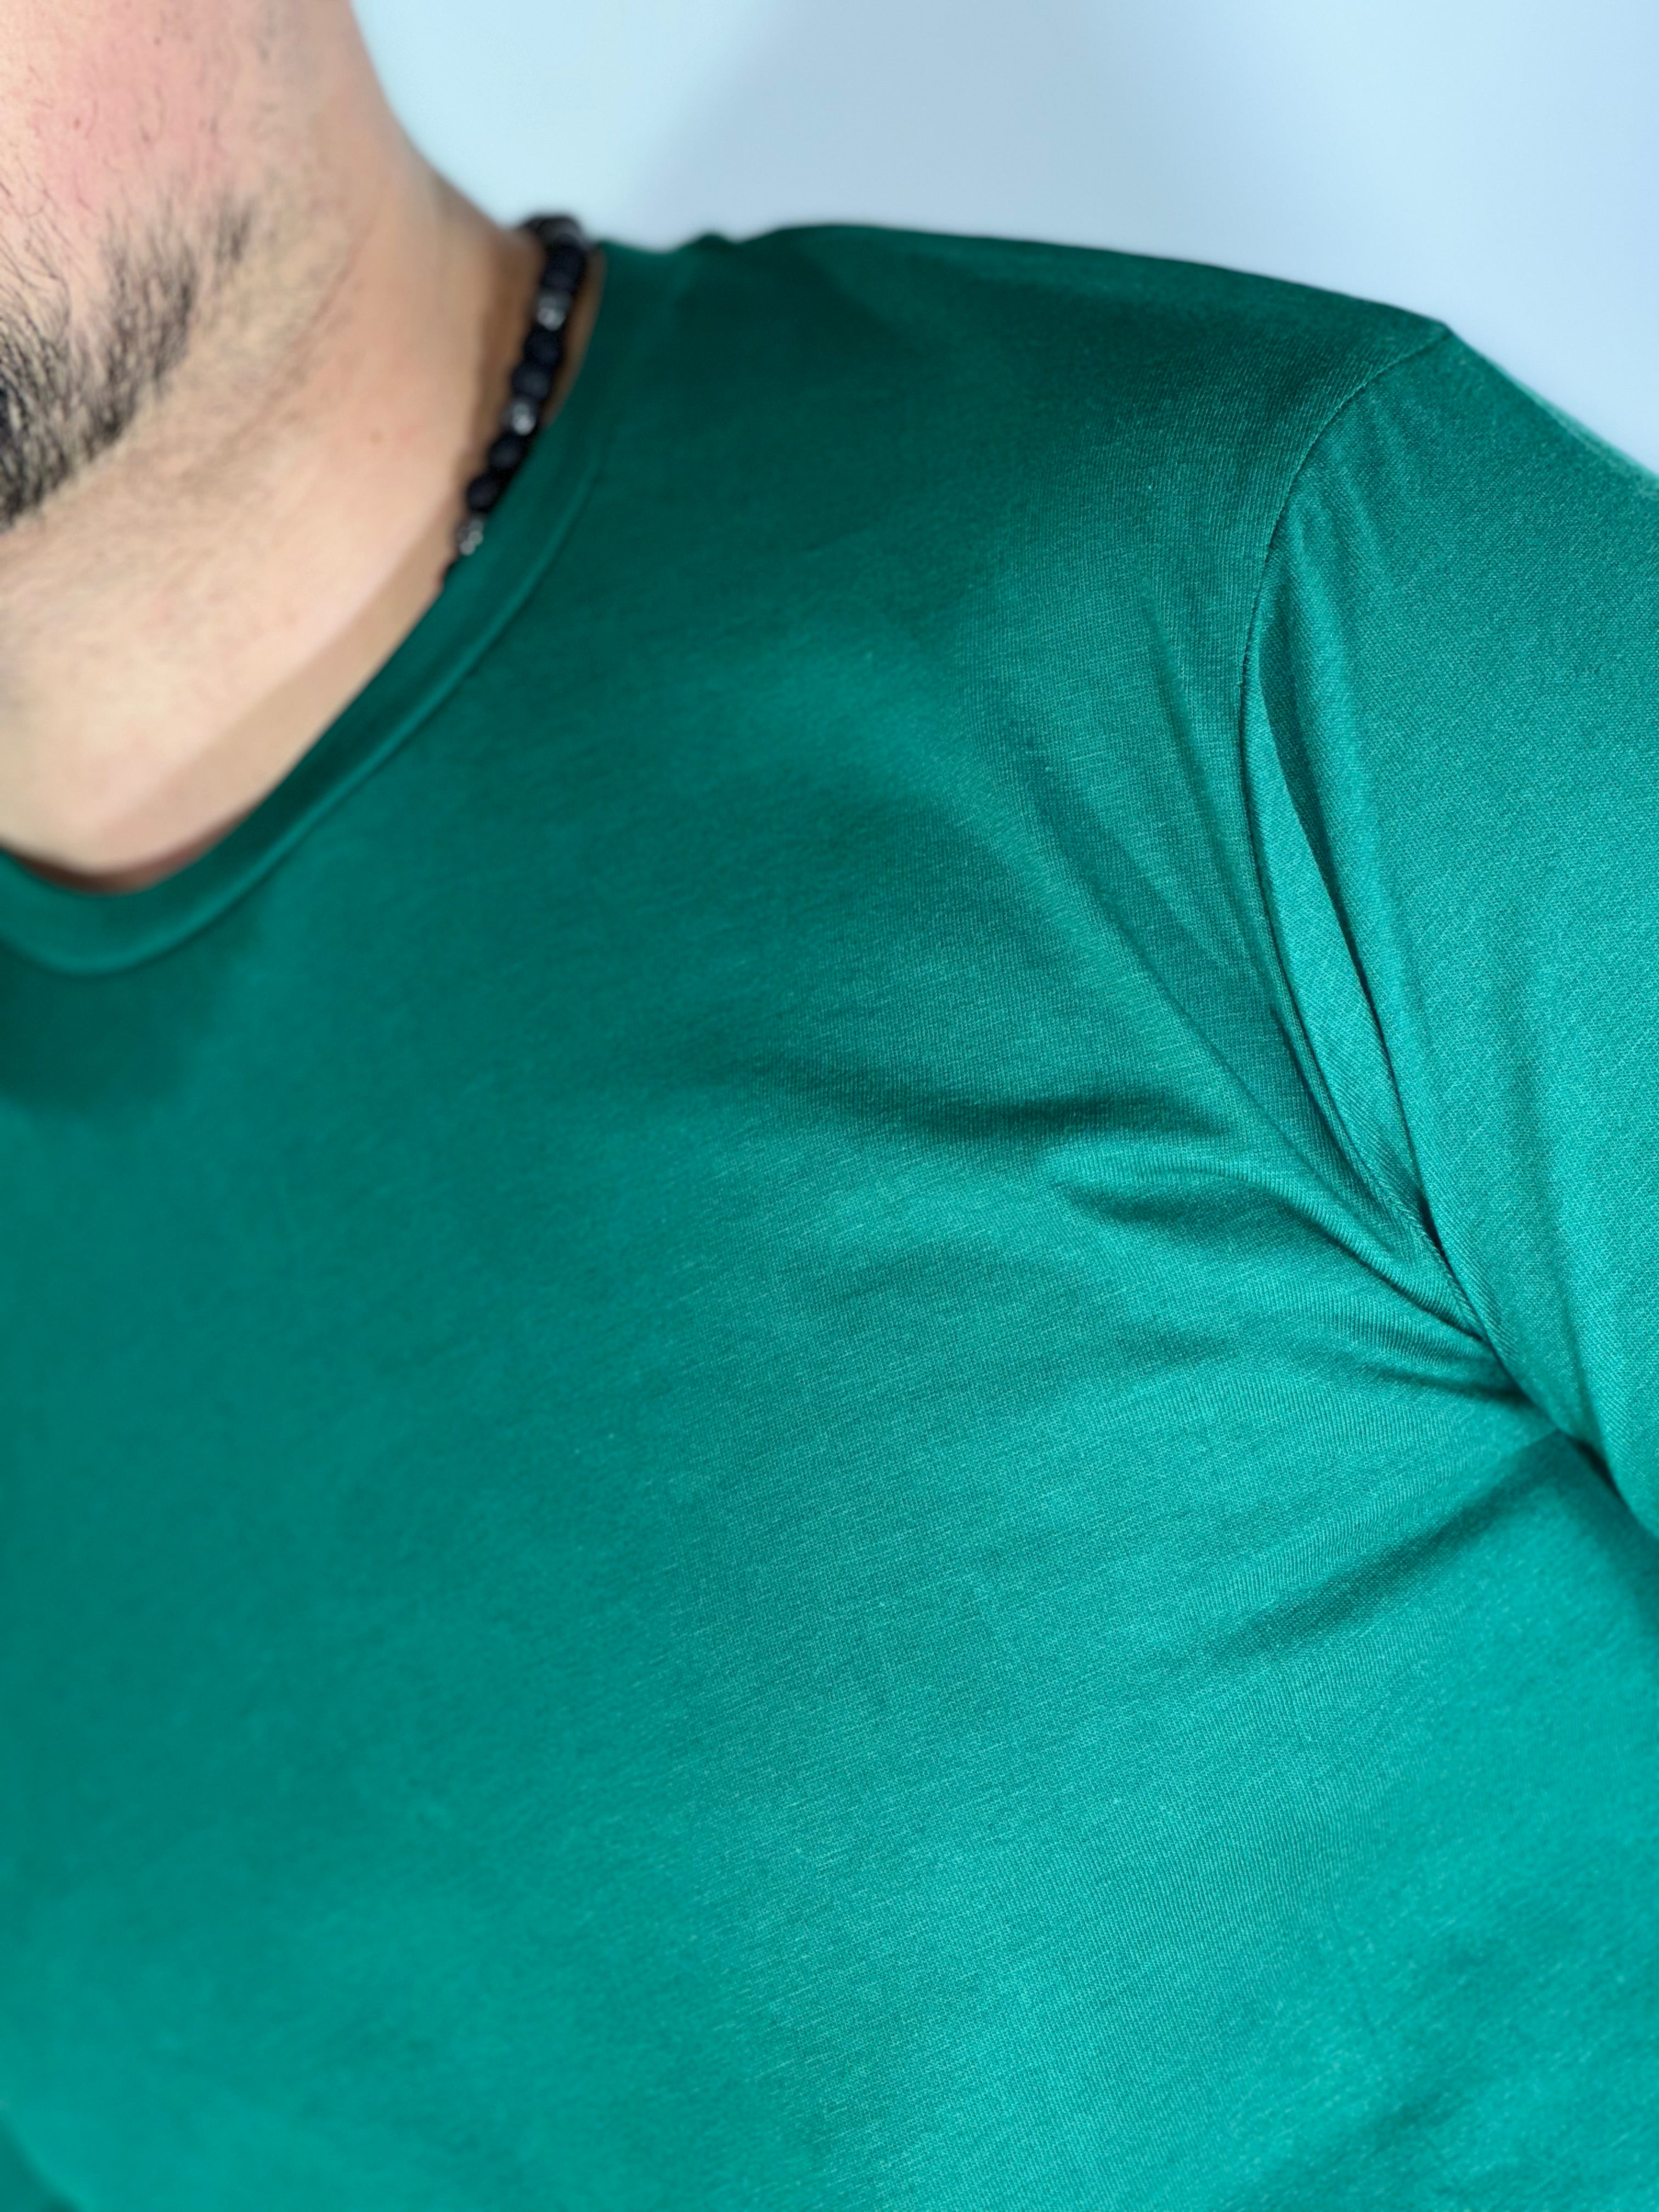 T-Shirt basic verde g. M19221